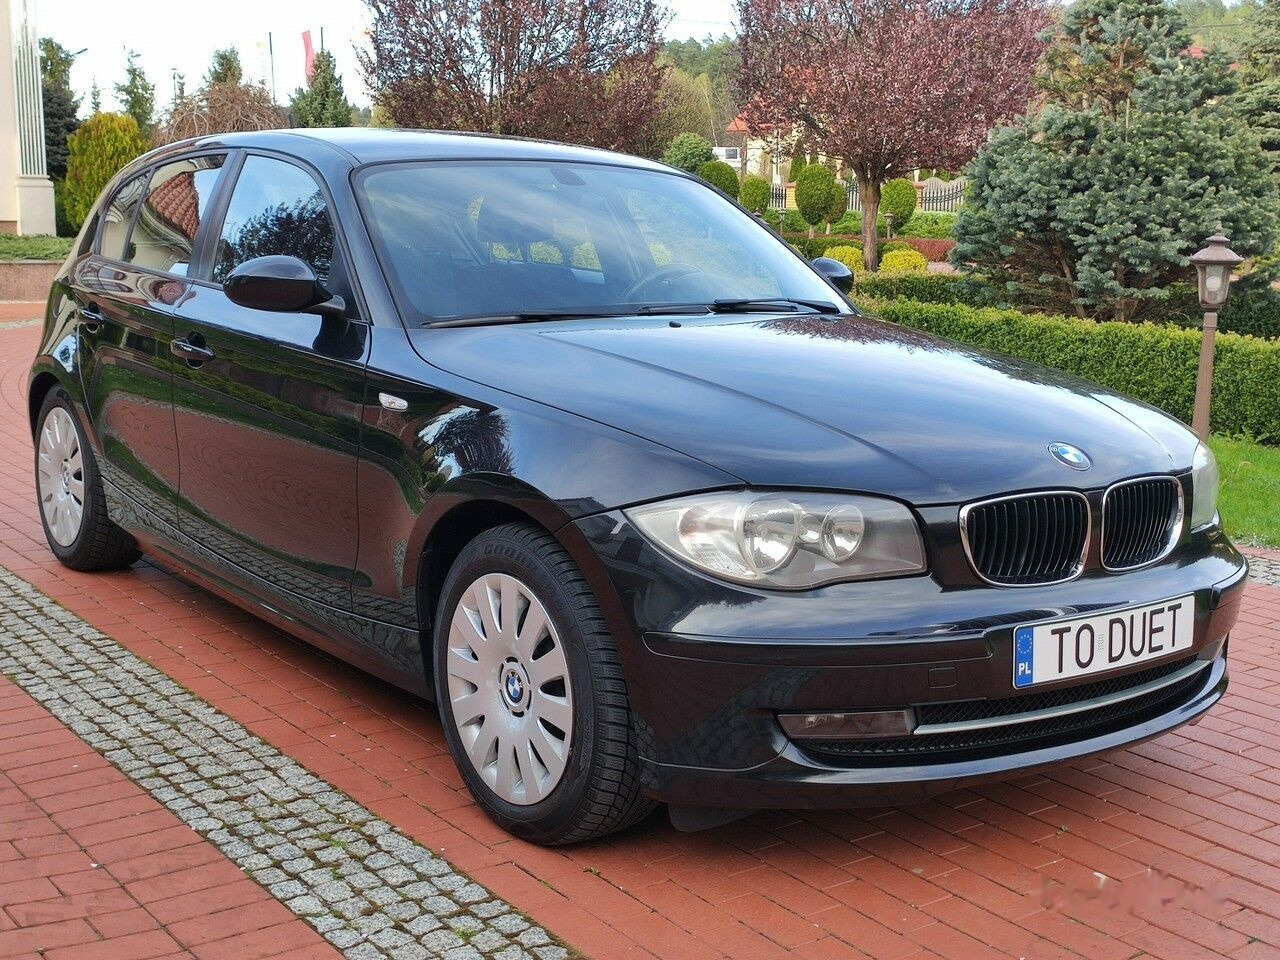 Auto BMW 116: pilt 3